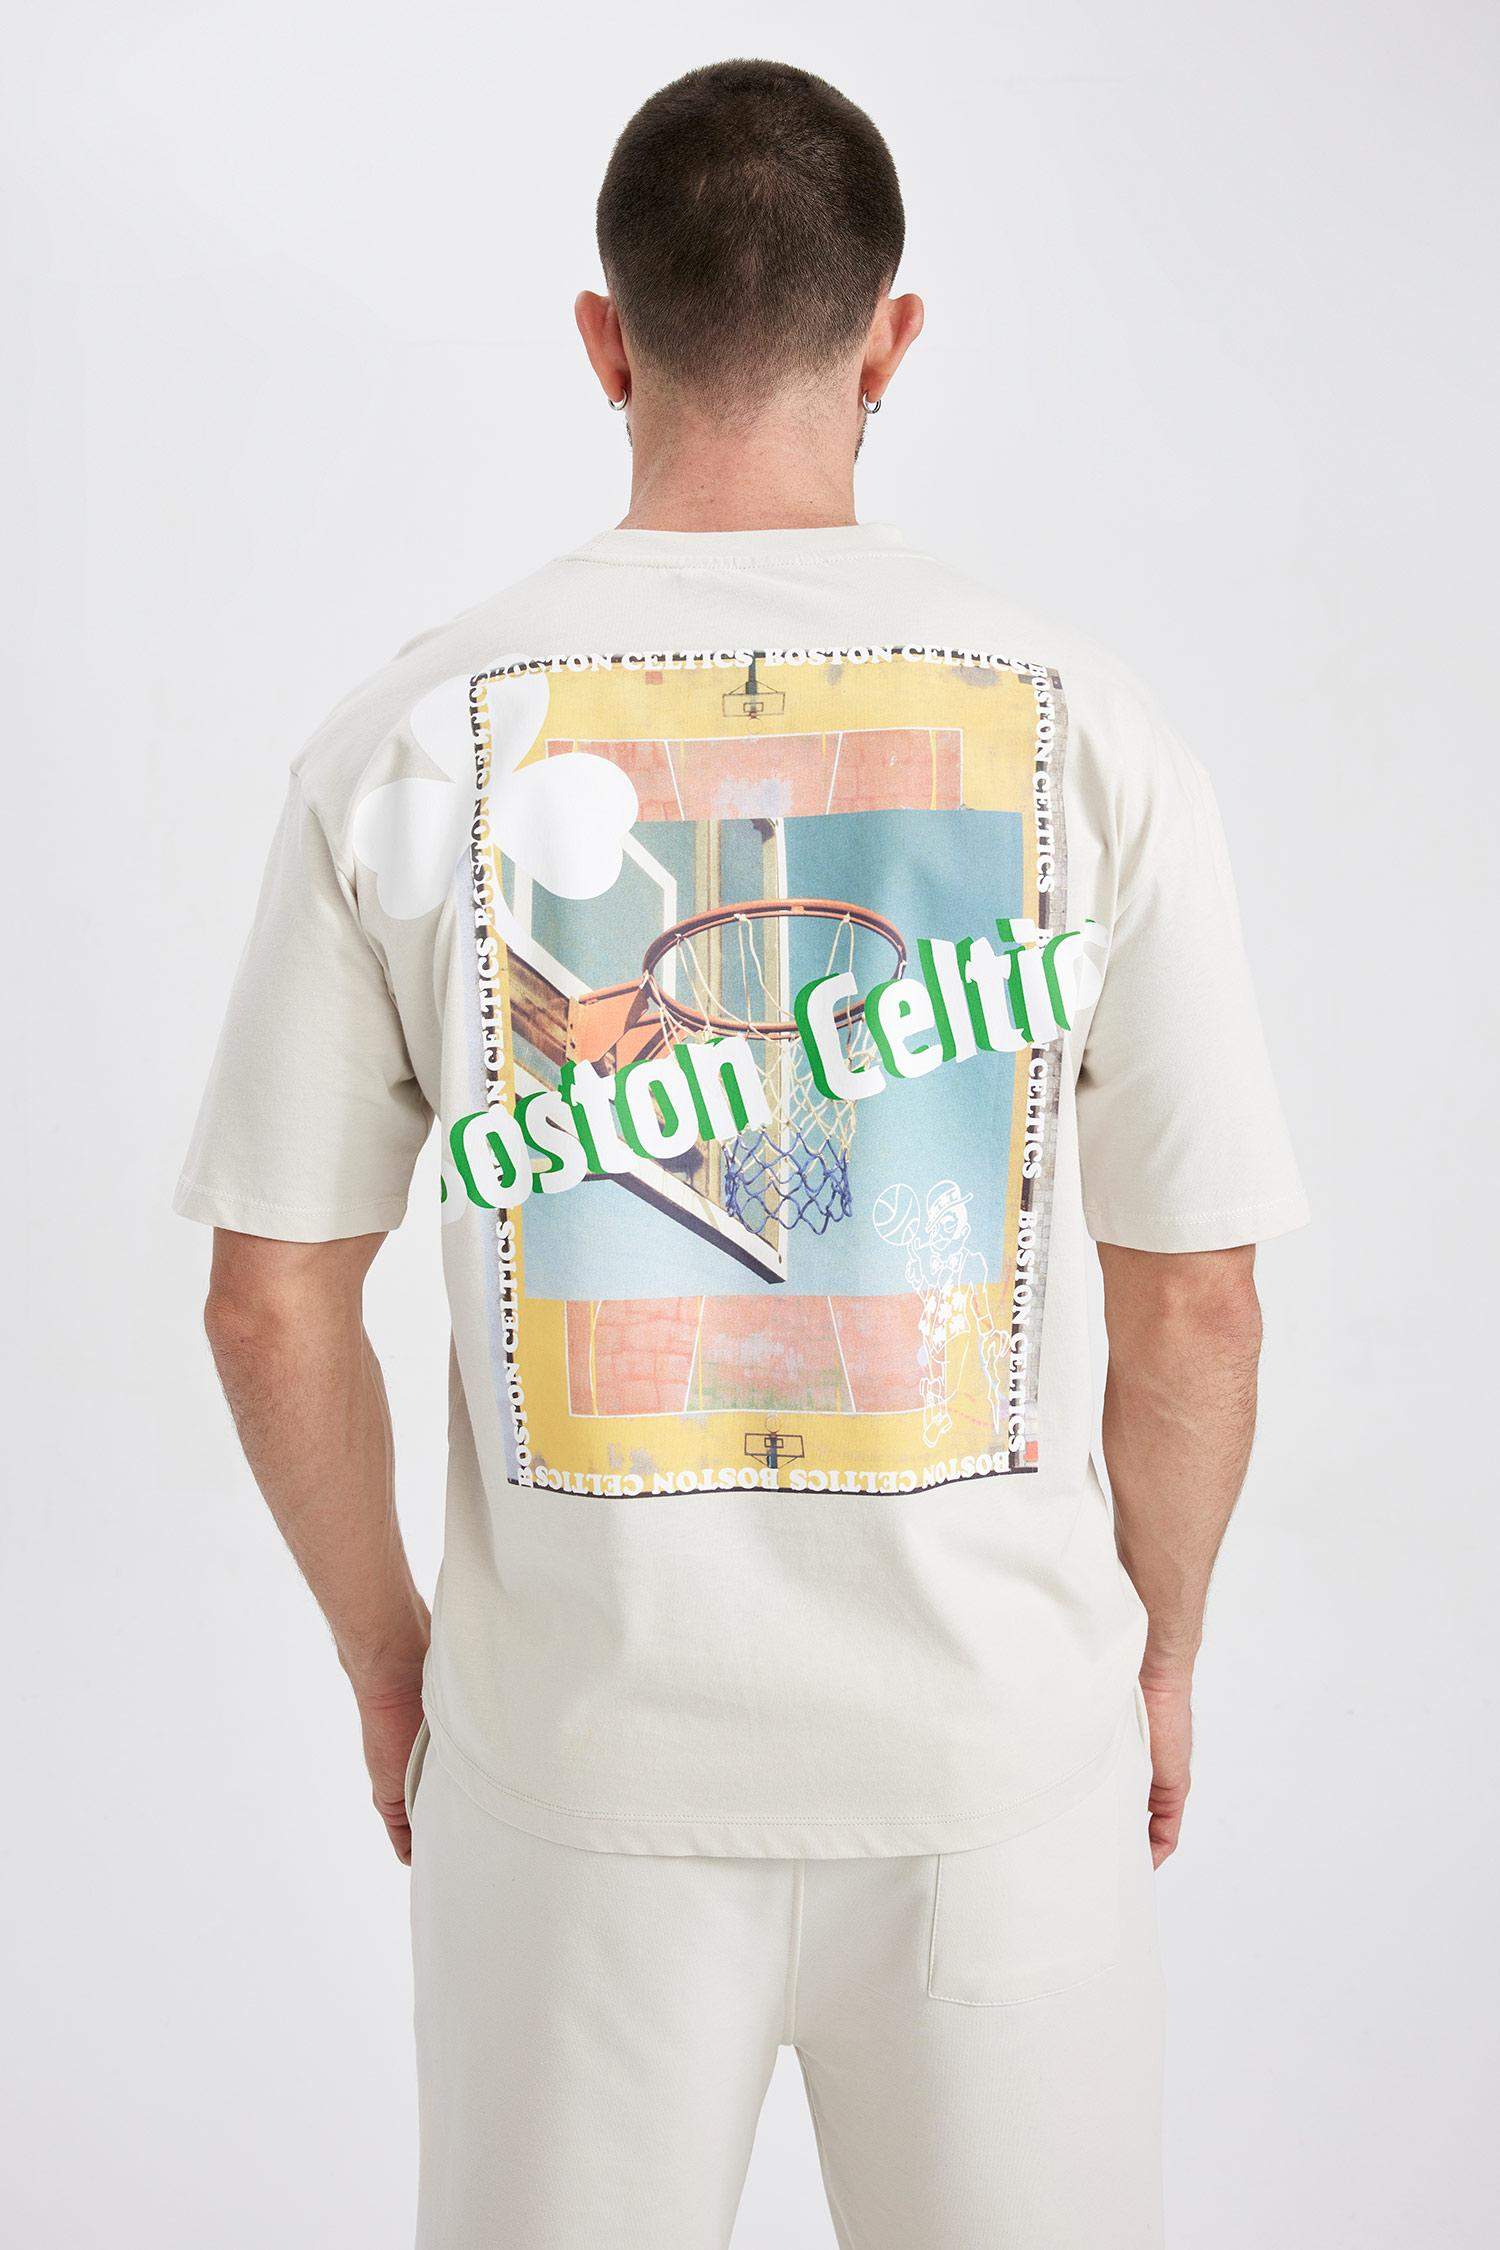 Ecru MAN DeFactoFit NBA Boston Celtics Licensed Oversize Fit Crew Neck  T-Shirt 2836197